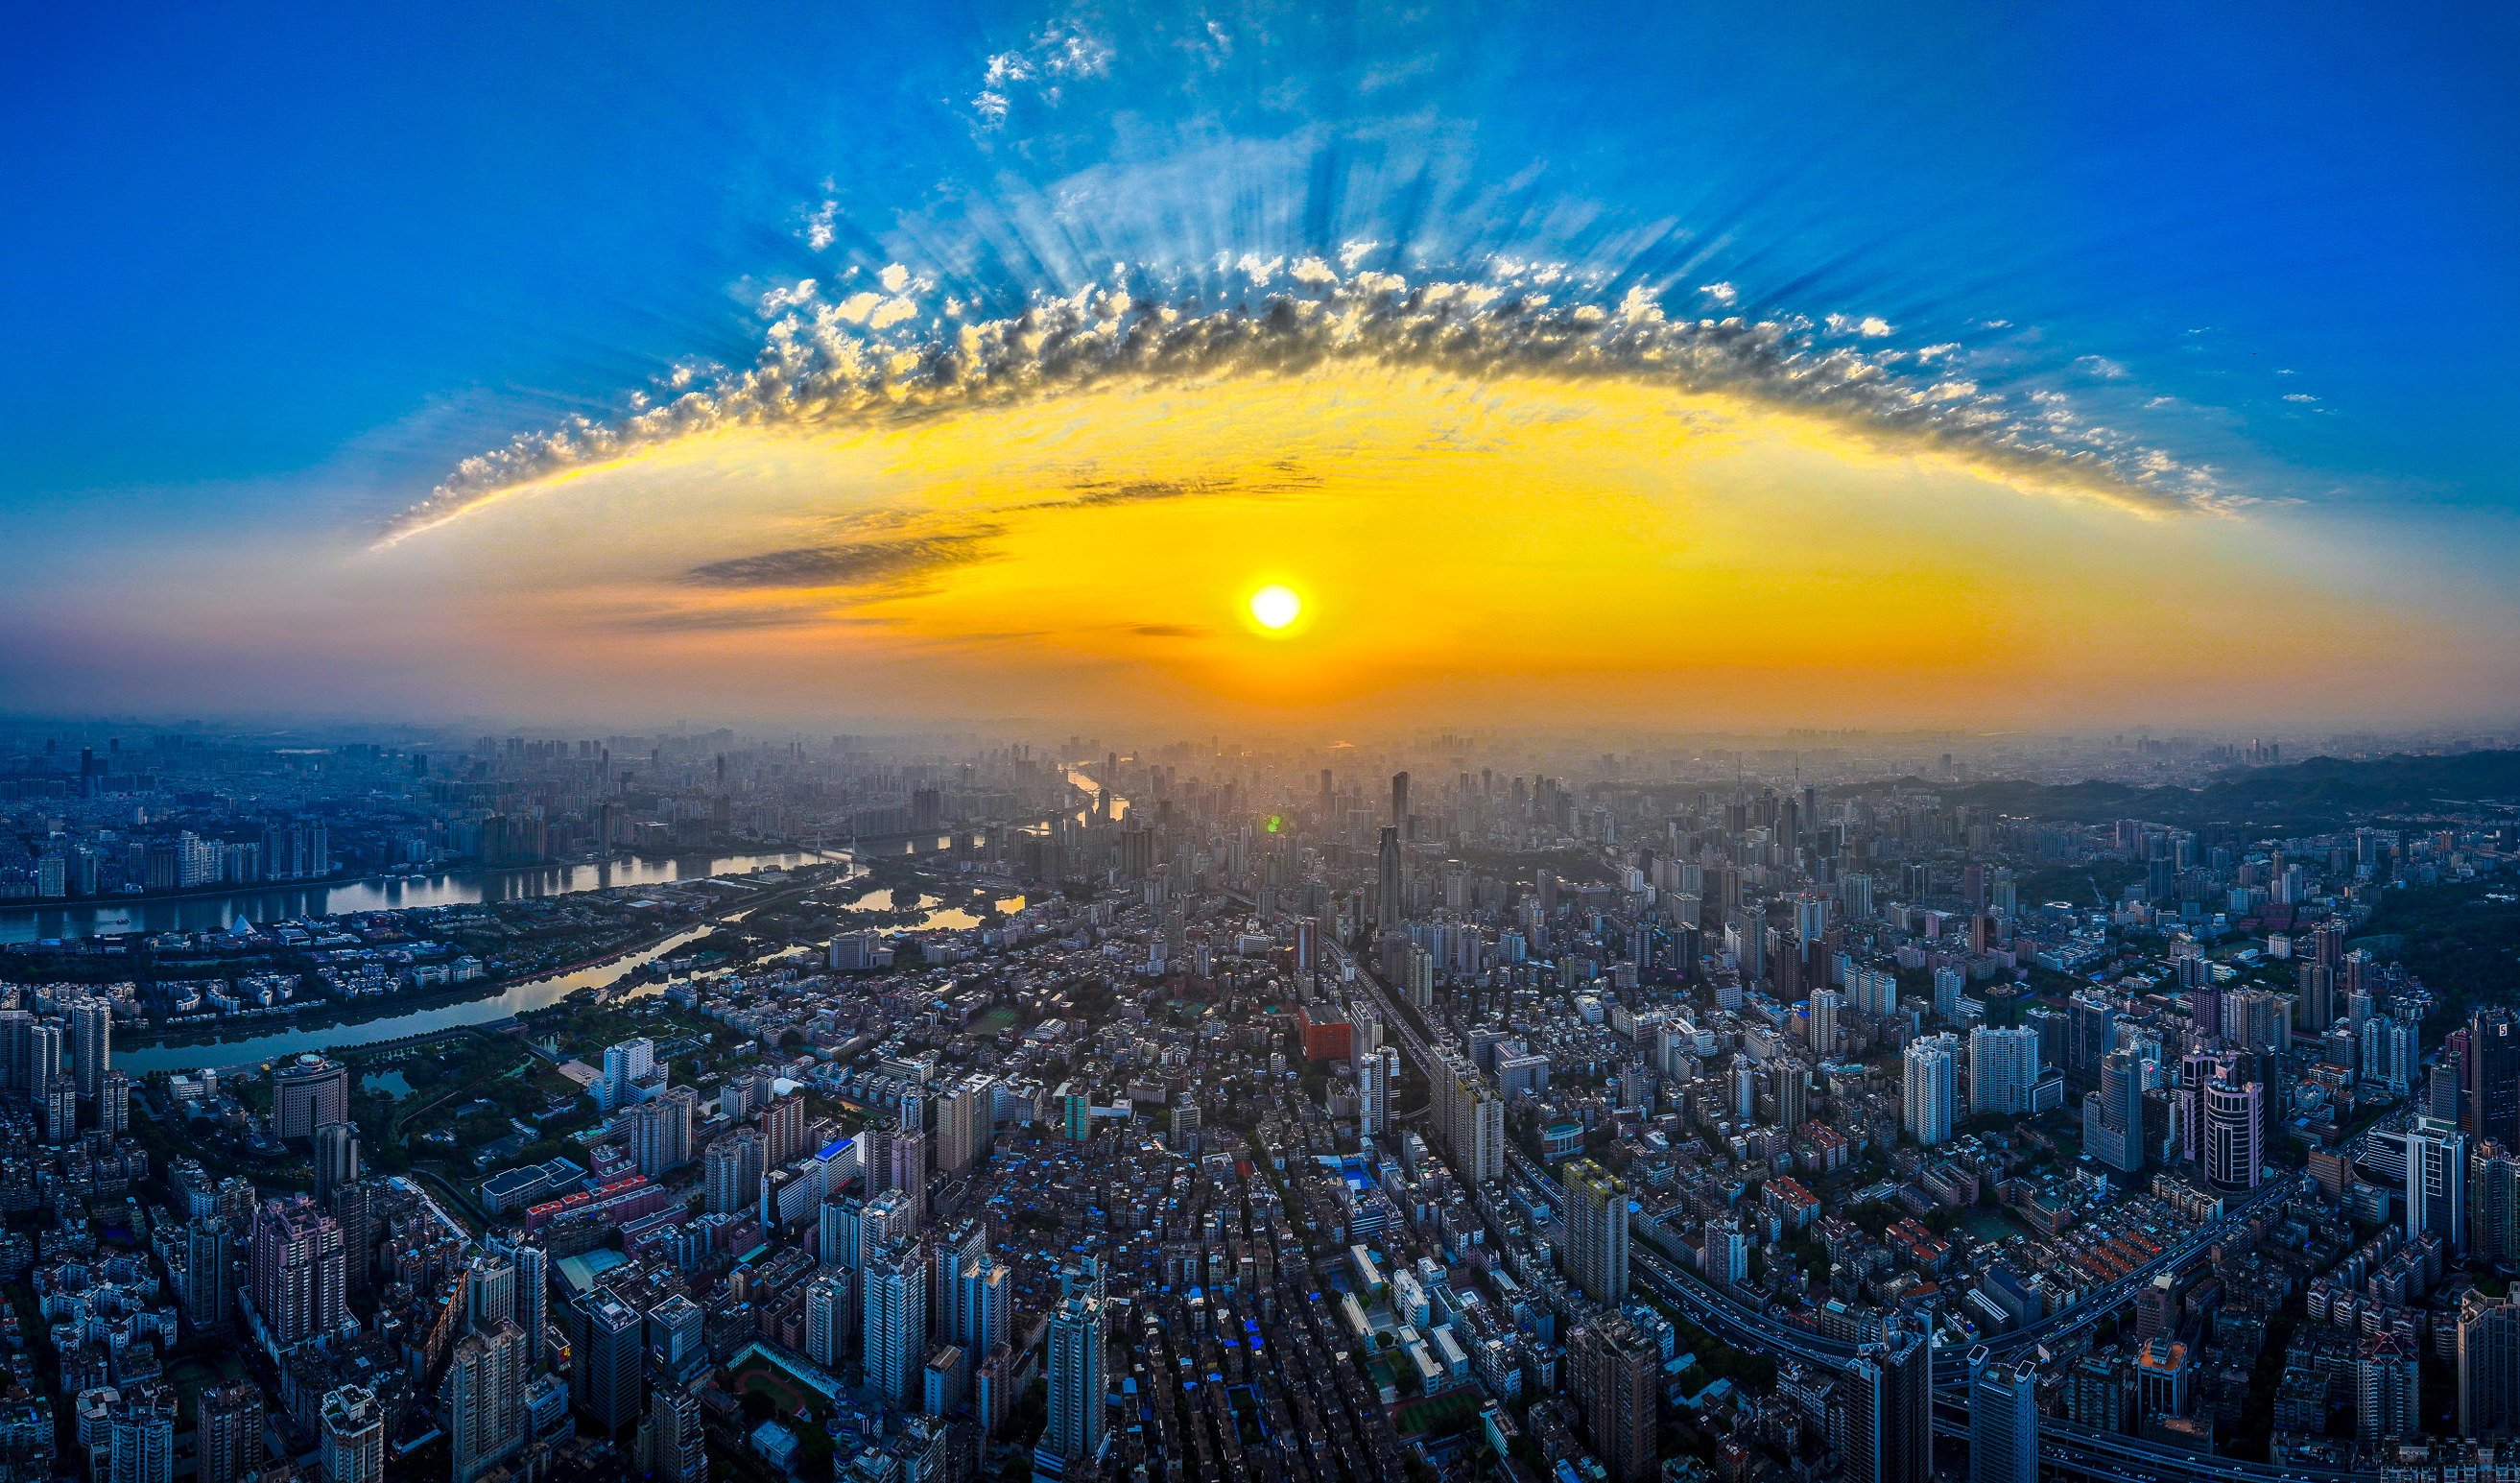 The Greater Bay Area is a key focus of economic development for Beijing. Photo: Xinhua/Liu Dawei